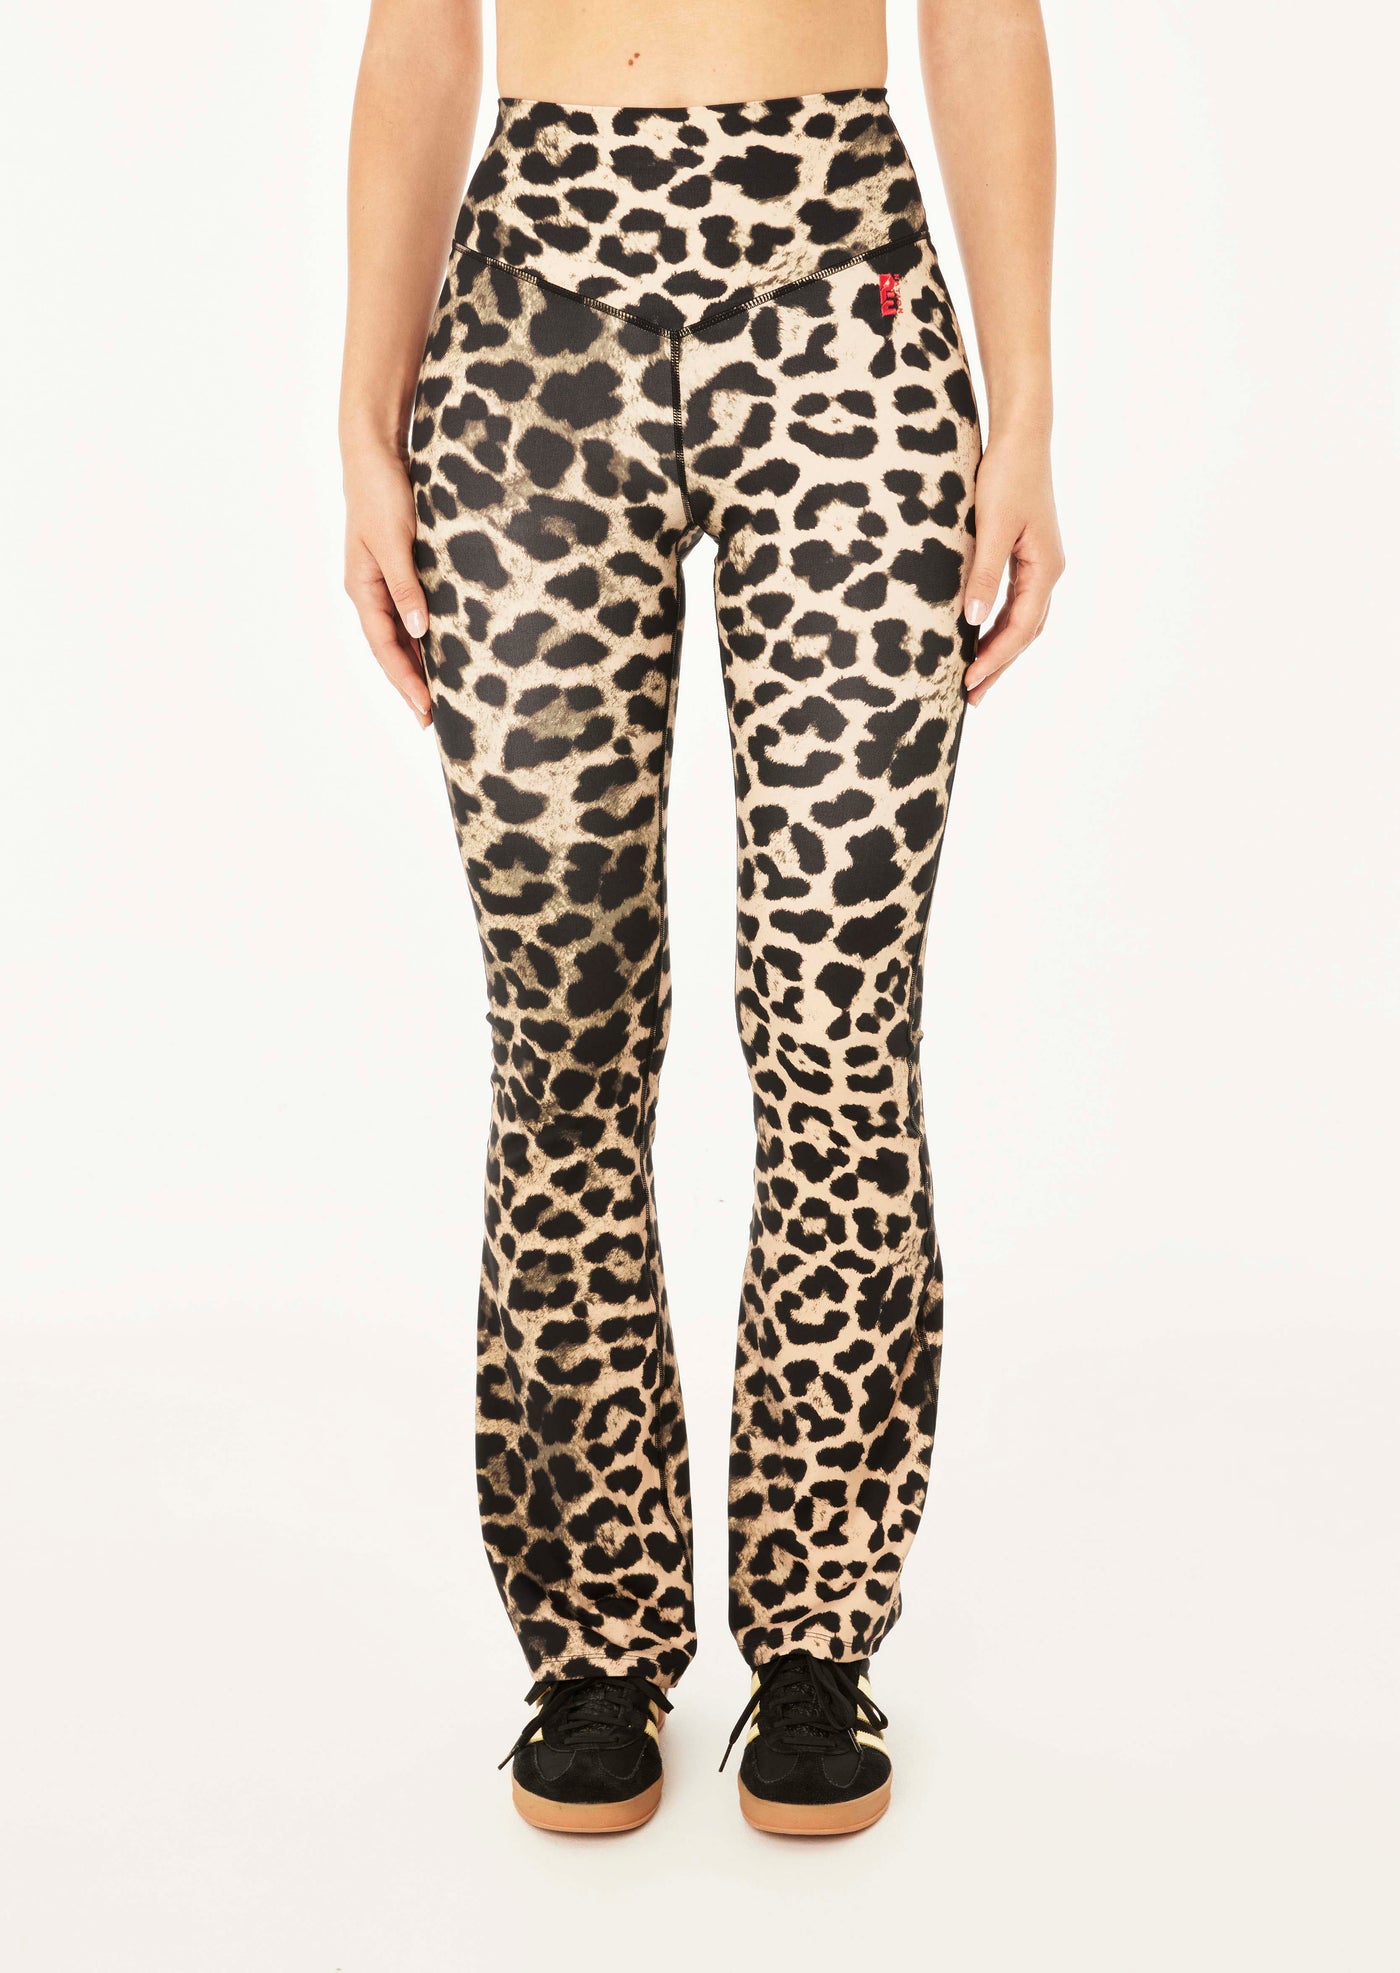 Pact Leopard Print Multi Color Burgundy Leggings Size M - 42% off